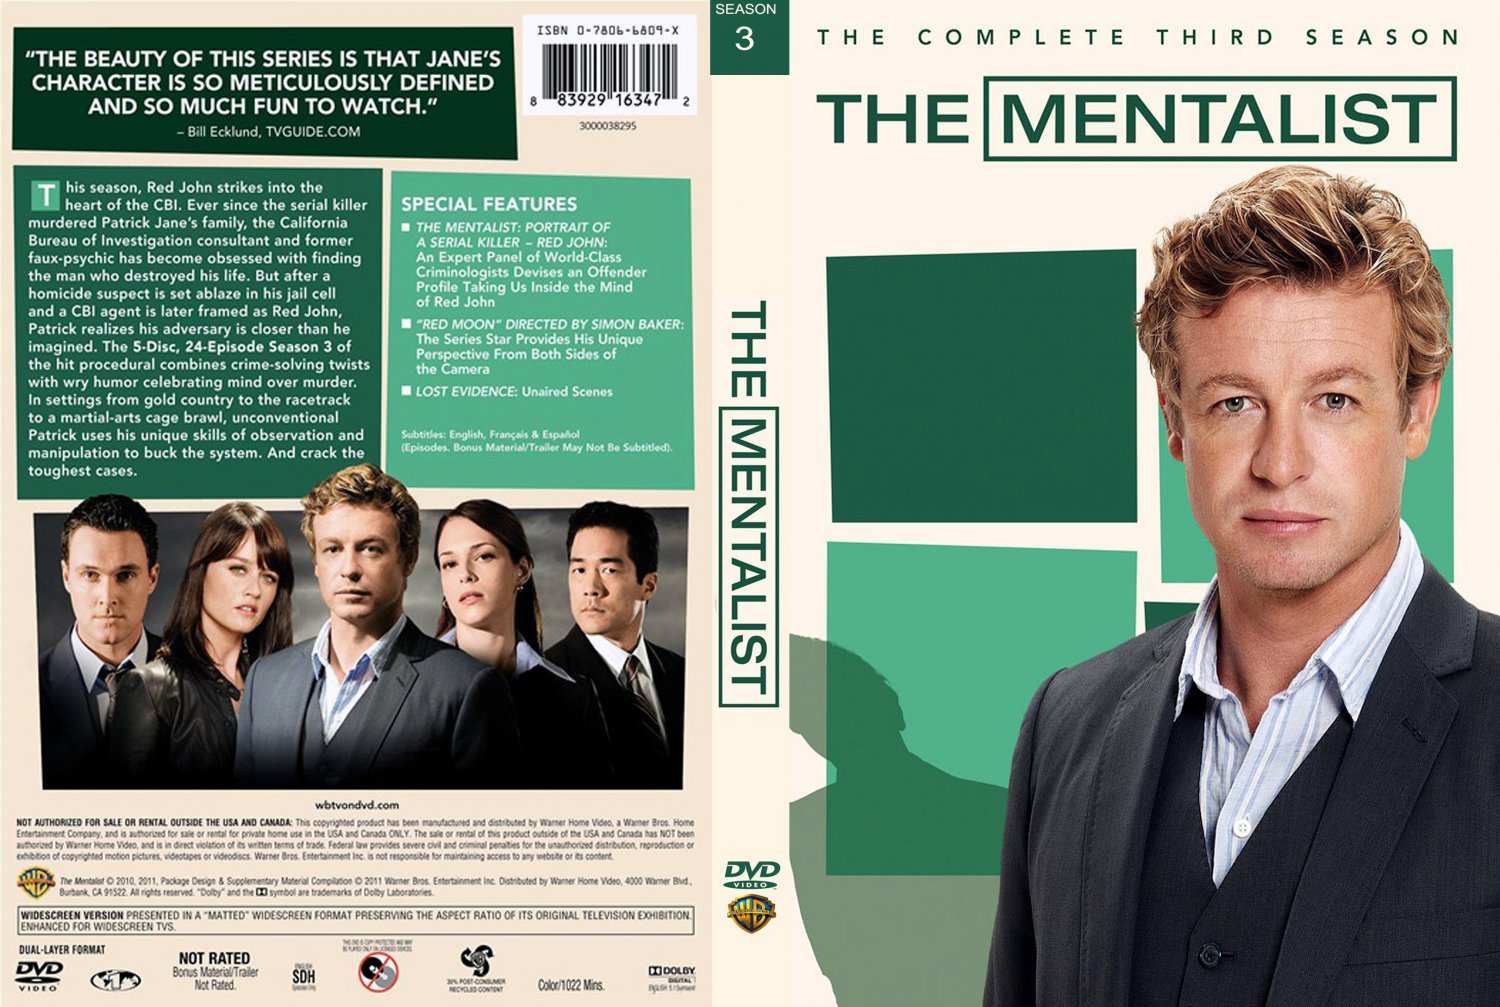 The Mentalist Season 3